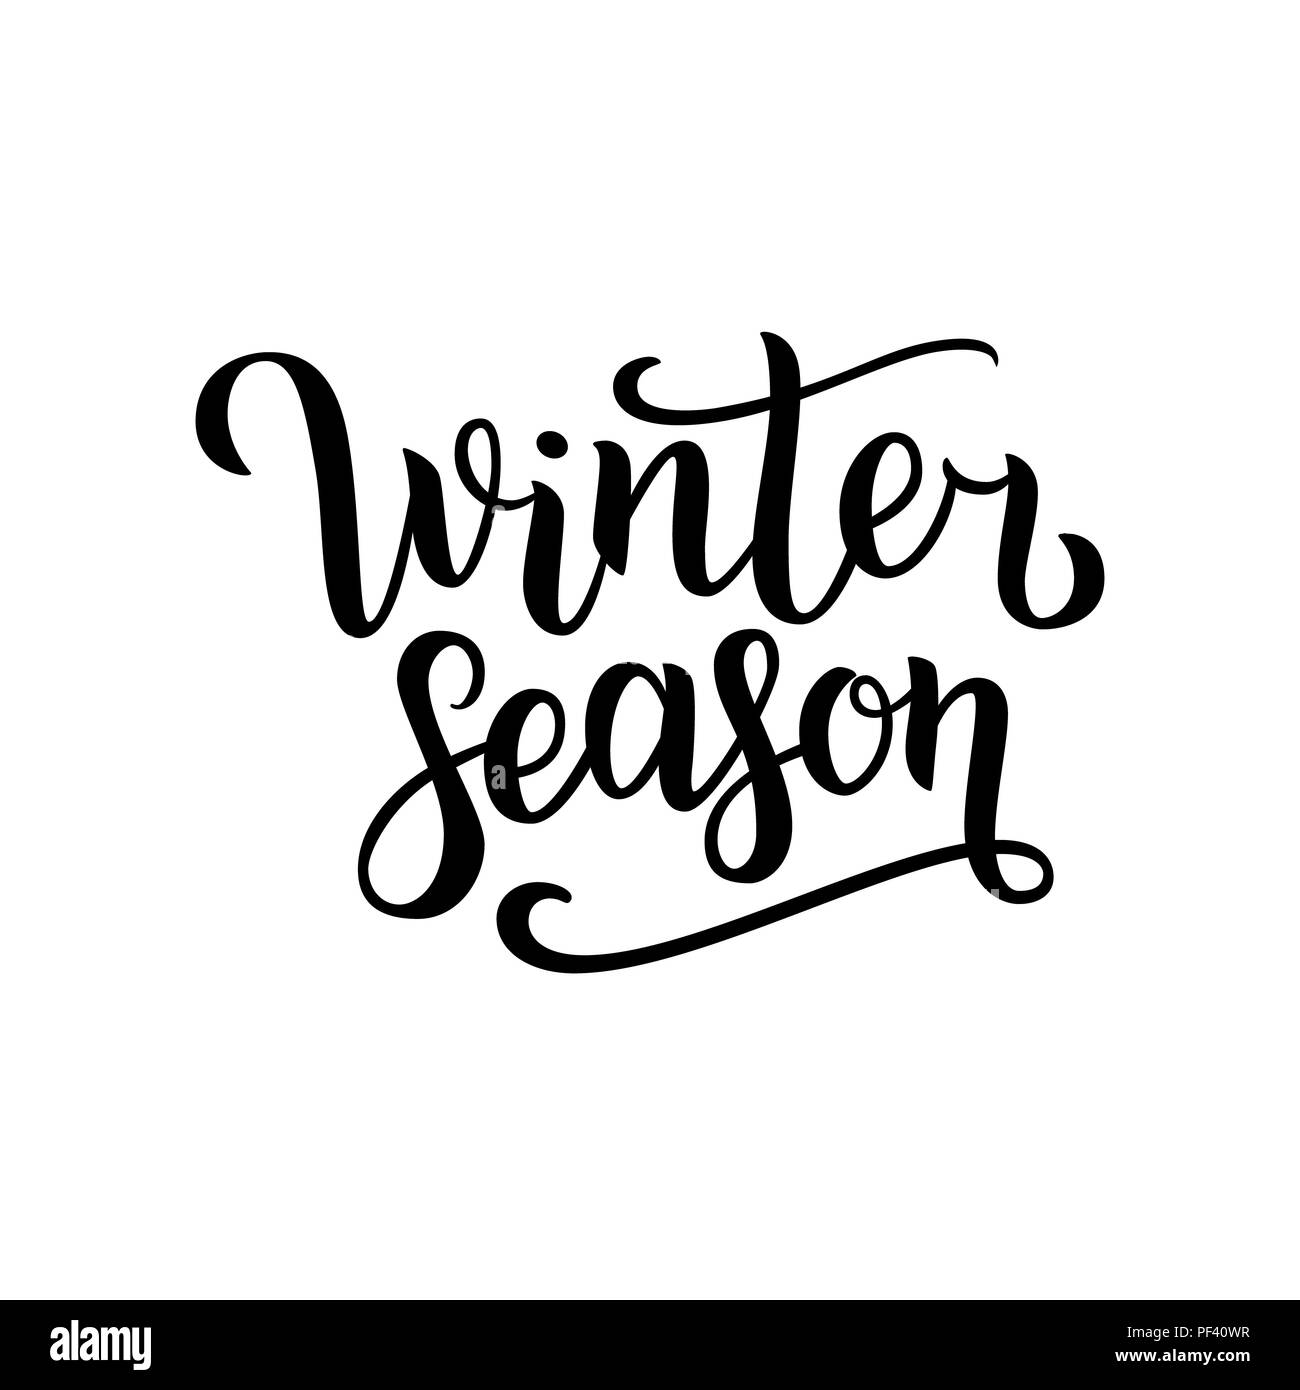 Winter season hand written inscription with isolated on white background.  illustration. Lettering. Postcard for winter season advertising Stock Photo